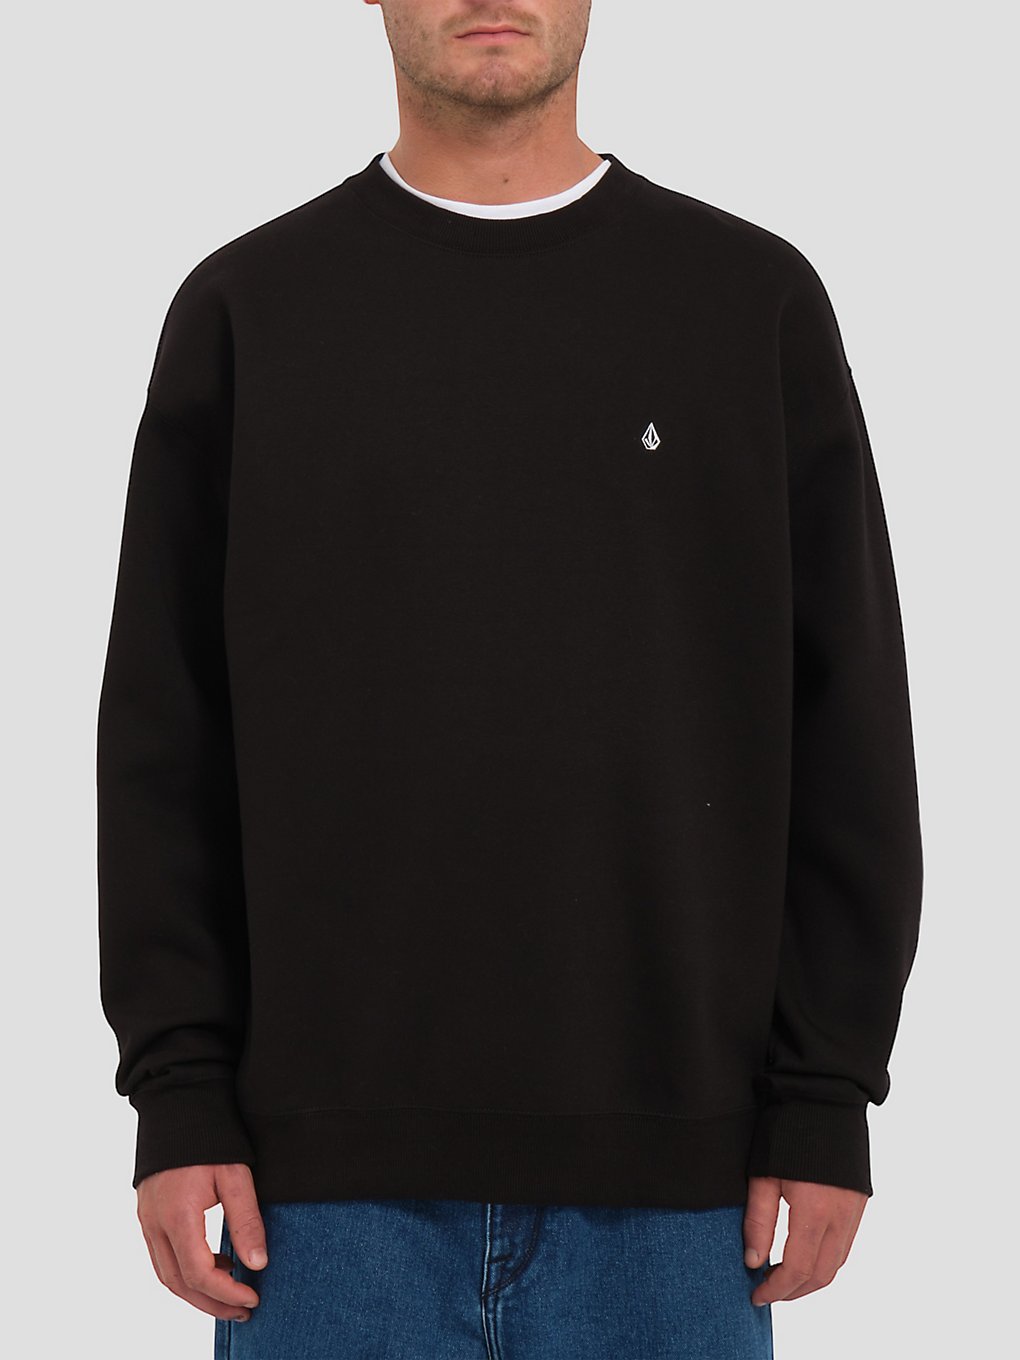 Volcom Single Stone Crew Sweater black kaufen